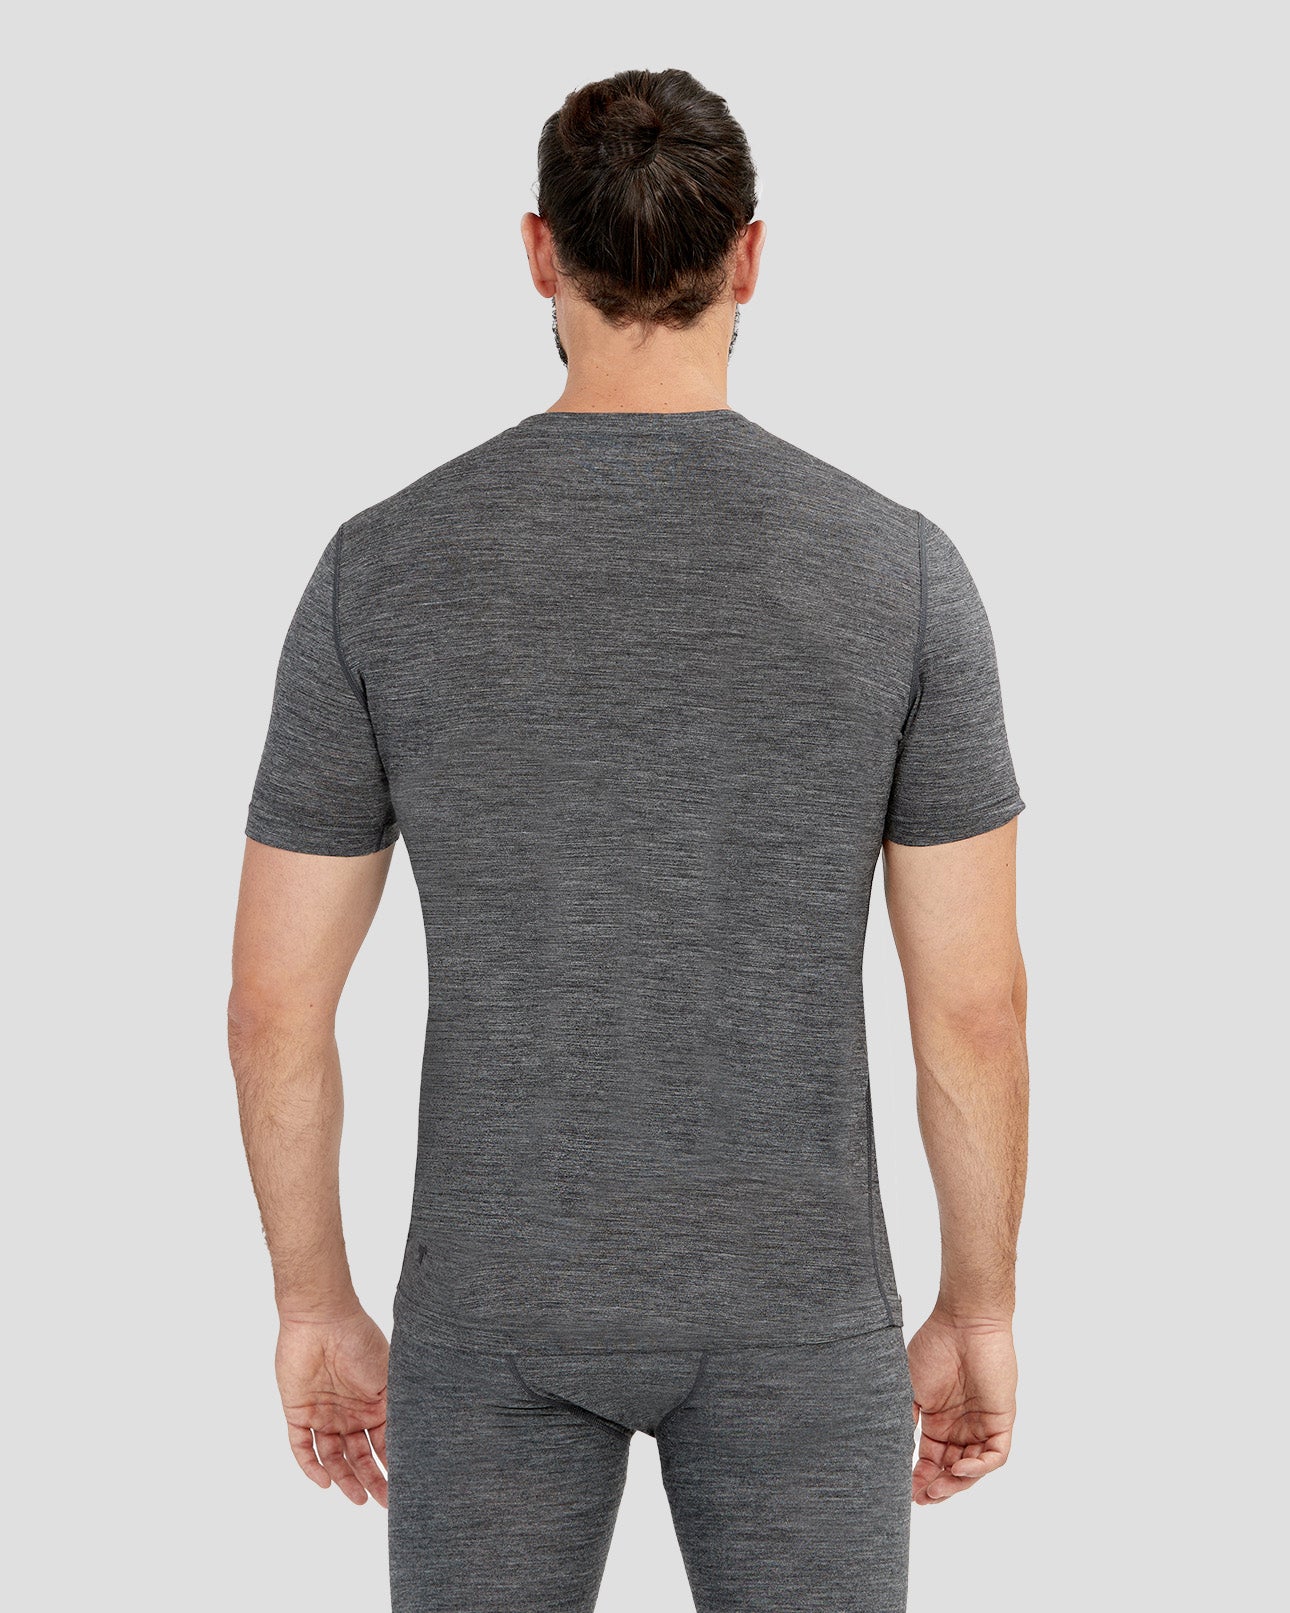 Men's All Season Merino T-Shirt | Color: Dark Grey Heather